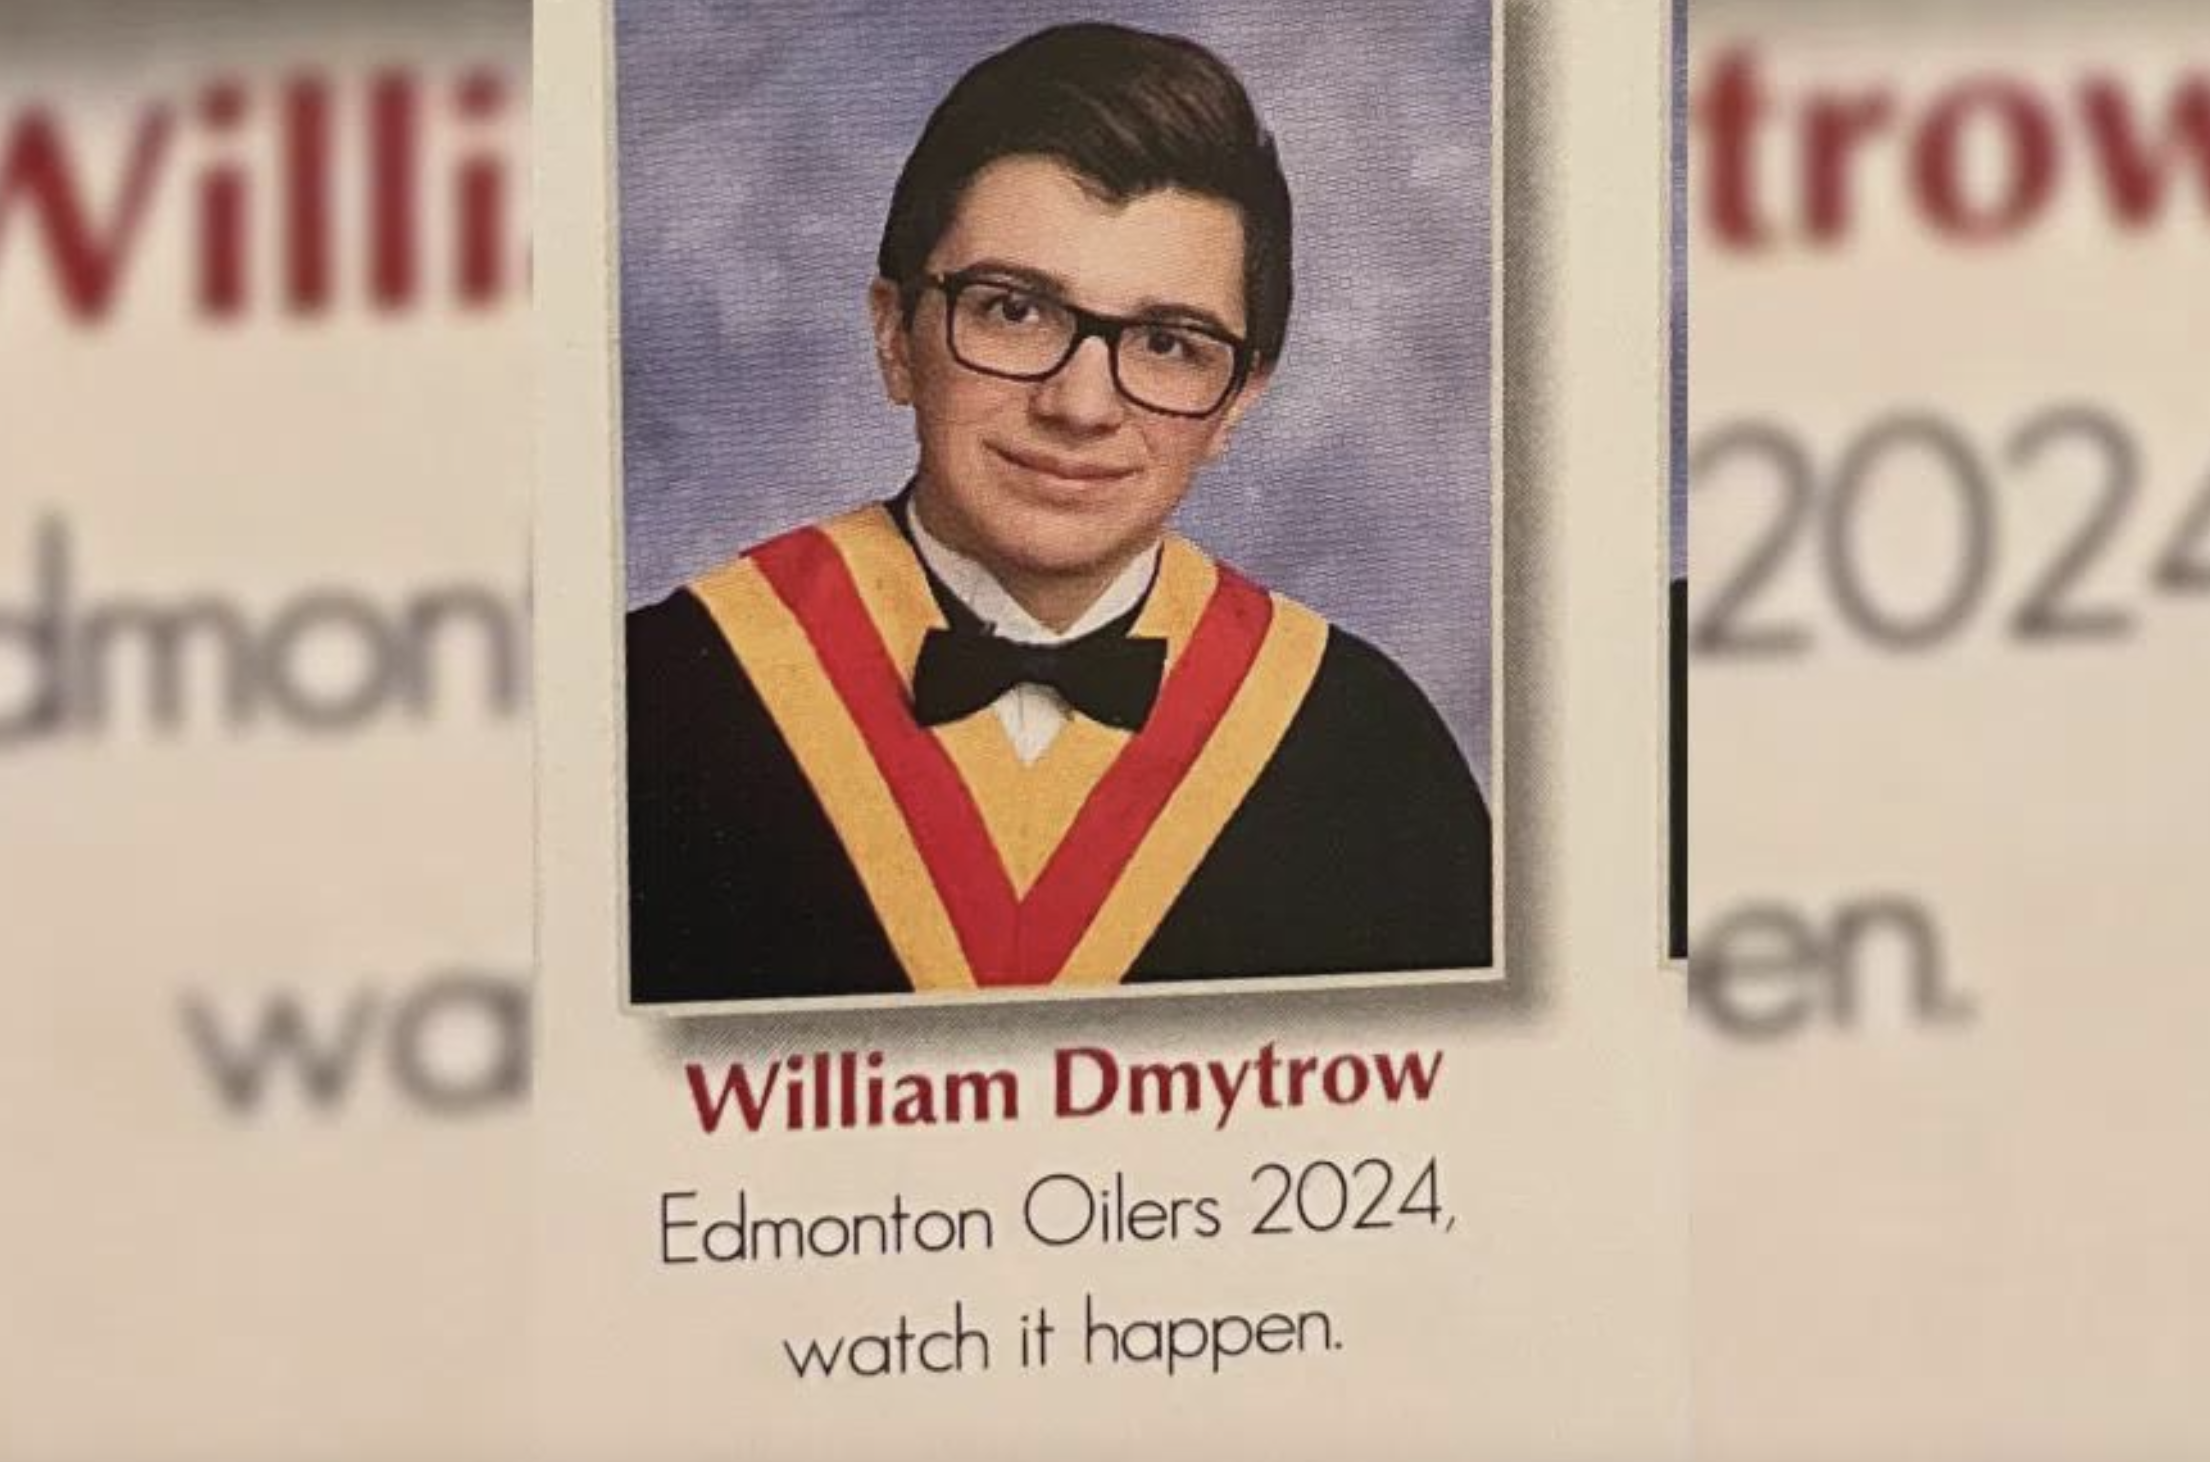 graduation - Villi dmon wa William Dmytrow Edmonton Oilers 2024, watch it happen. trow 2024 en